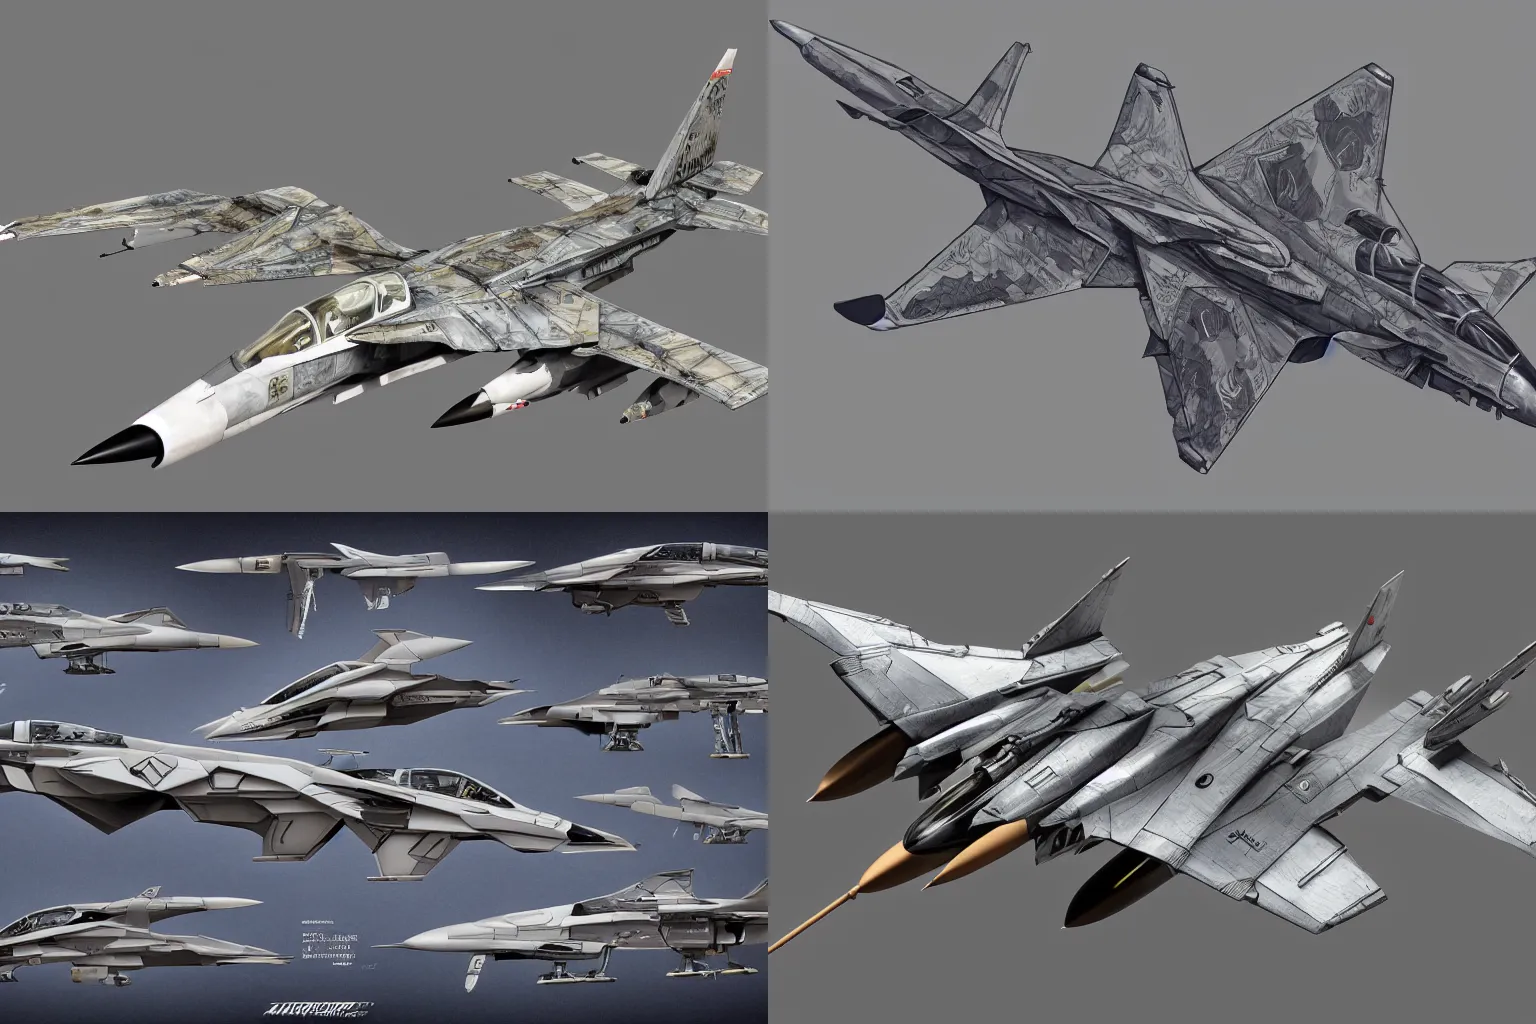 Prompt: iconic fighter jet concept designed by shoji kawamori, tomcat raptor hornet falcon, detailed and intricate, trending on artstation